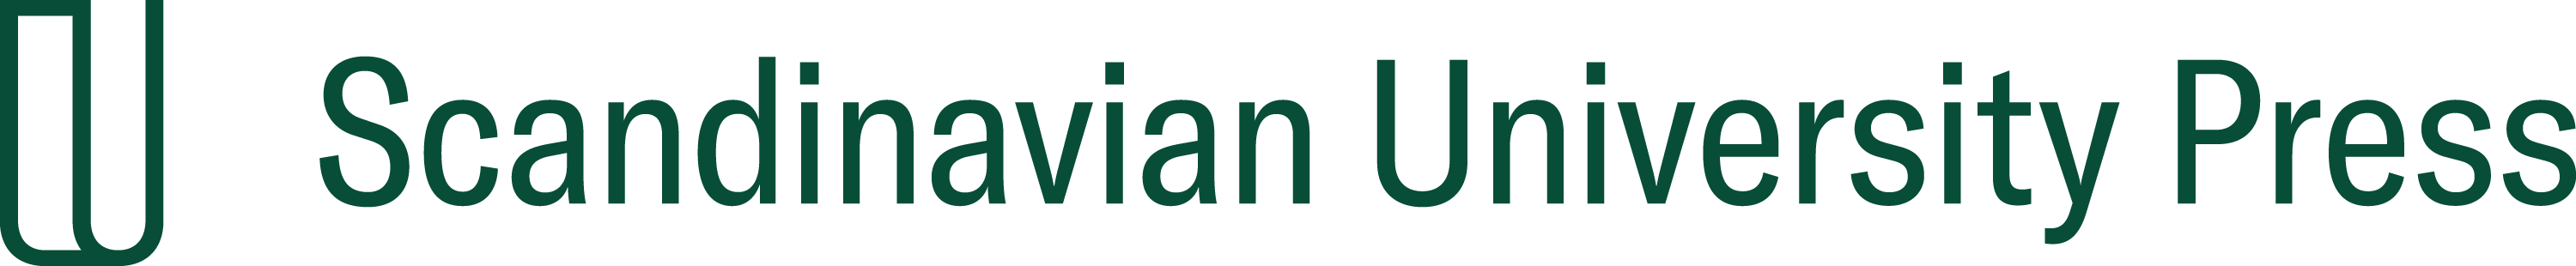 Scandinavian University Press logo